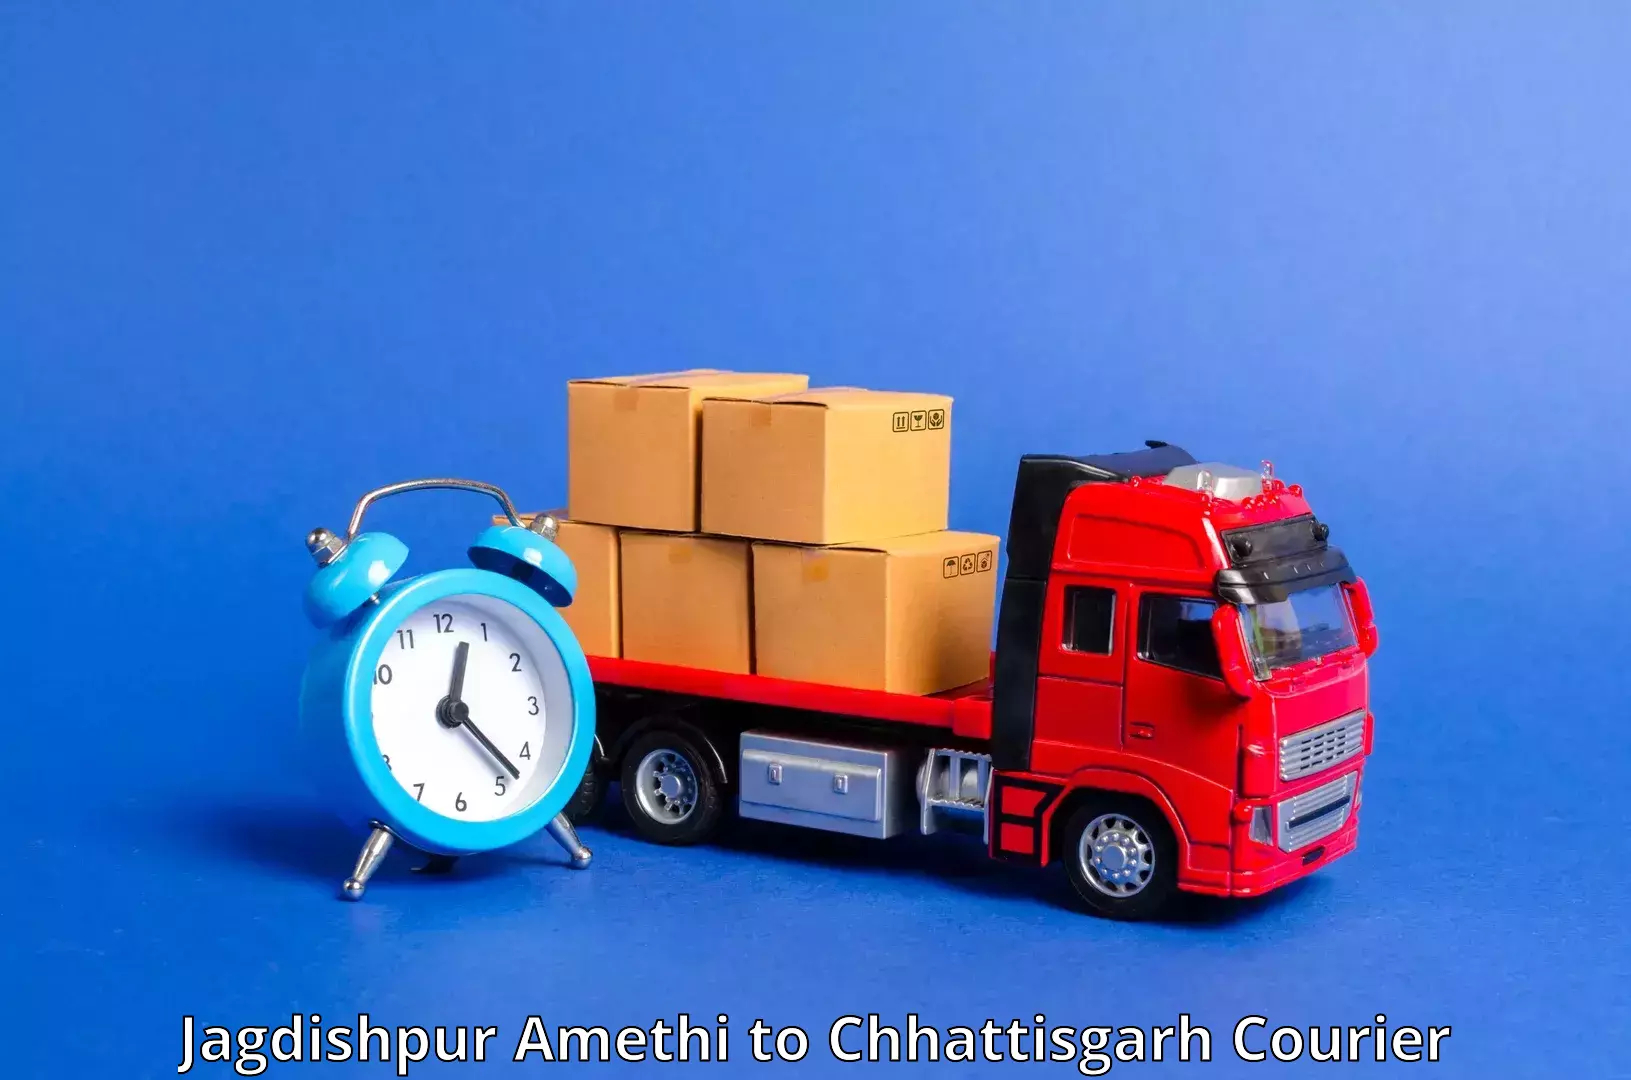 User-friendly delivery service Jagdishpur Amethi to Raipur